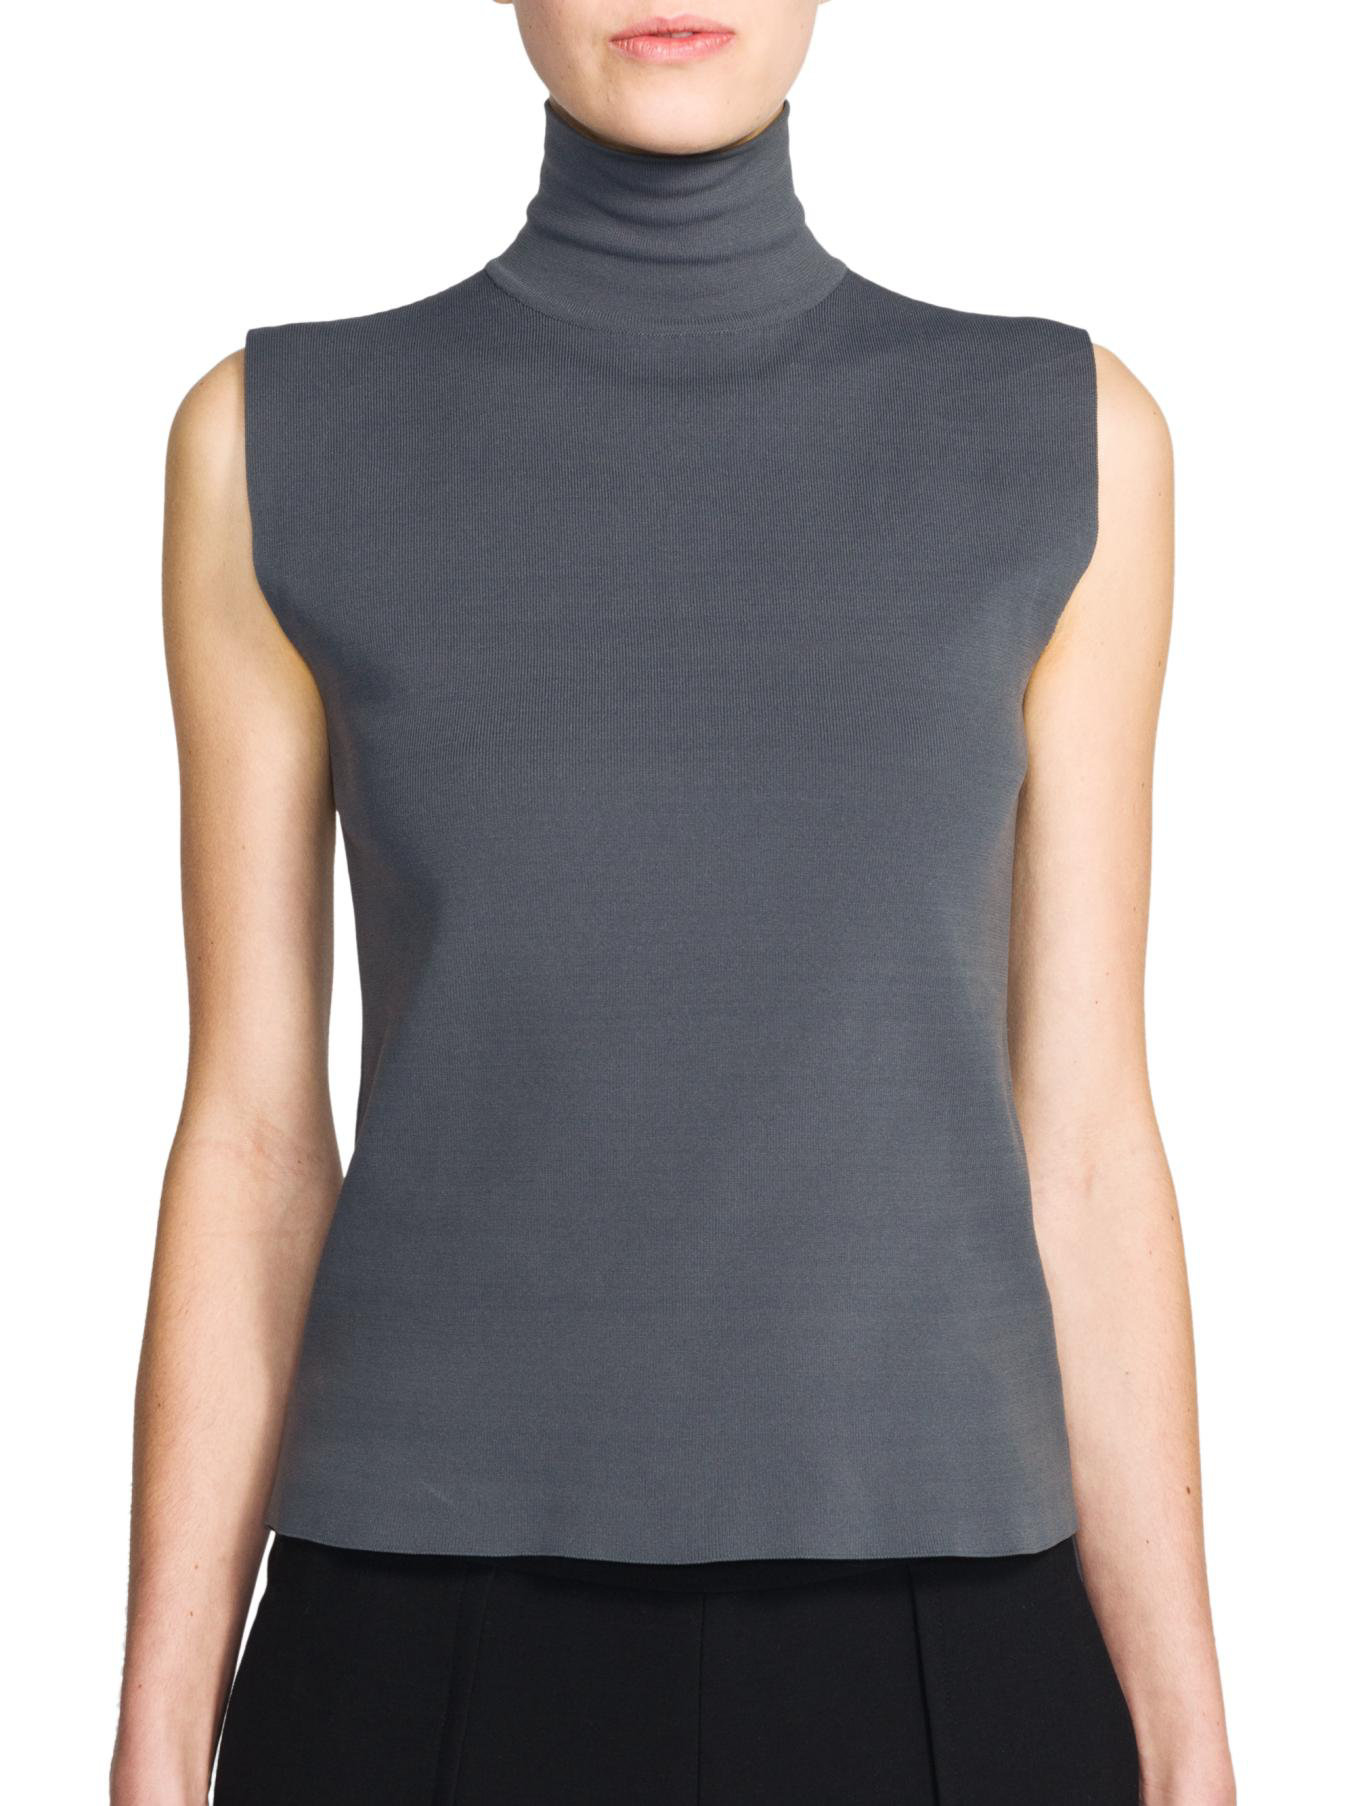 Lyst - Marni Sleeveless Knit Turtleneck in Gray